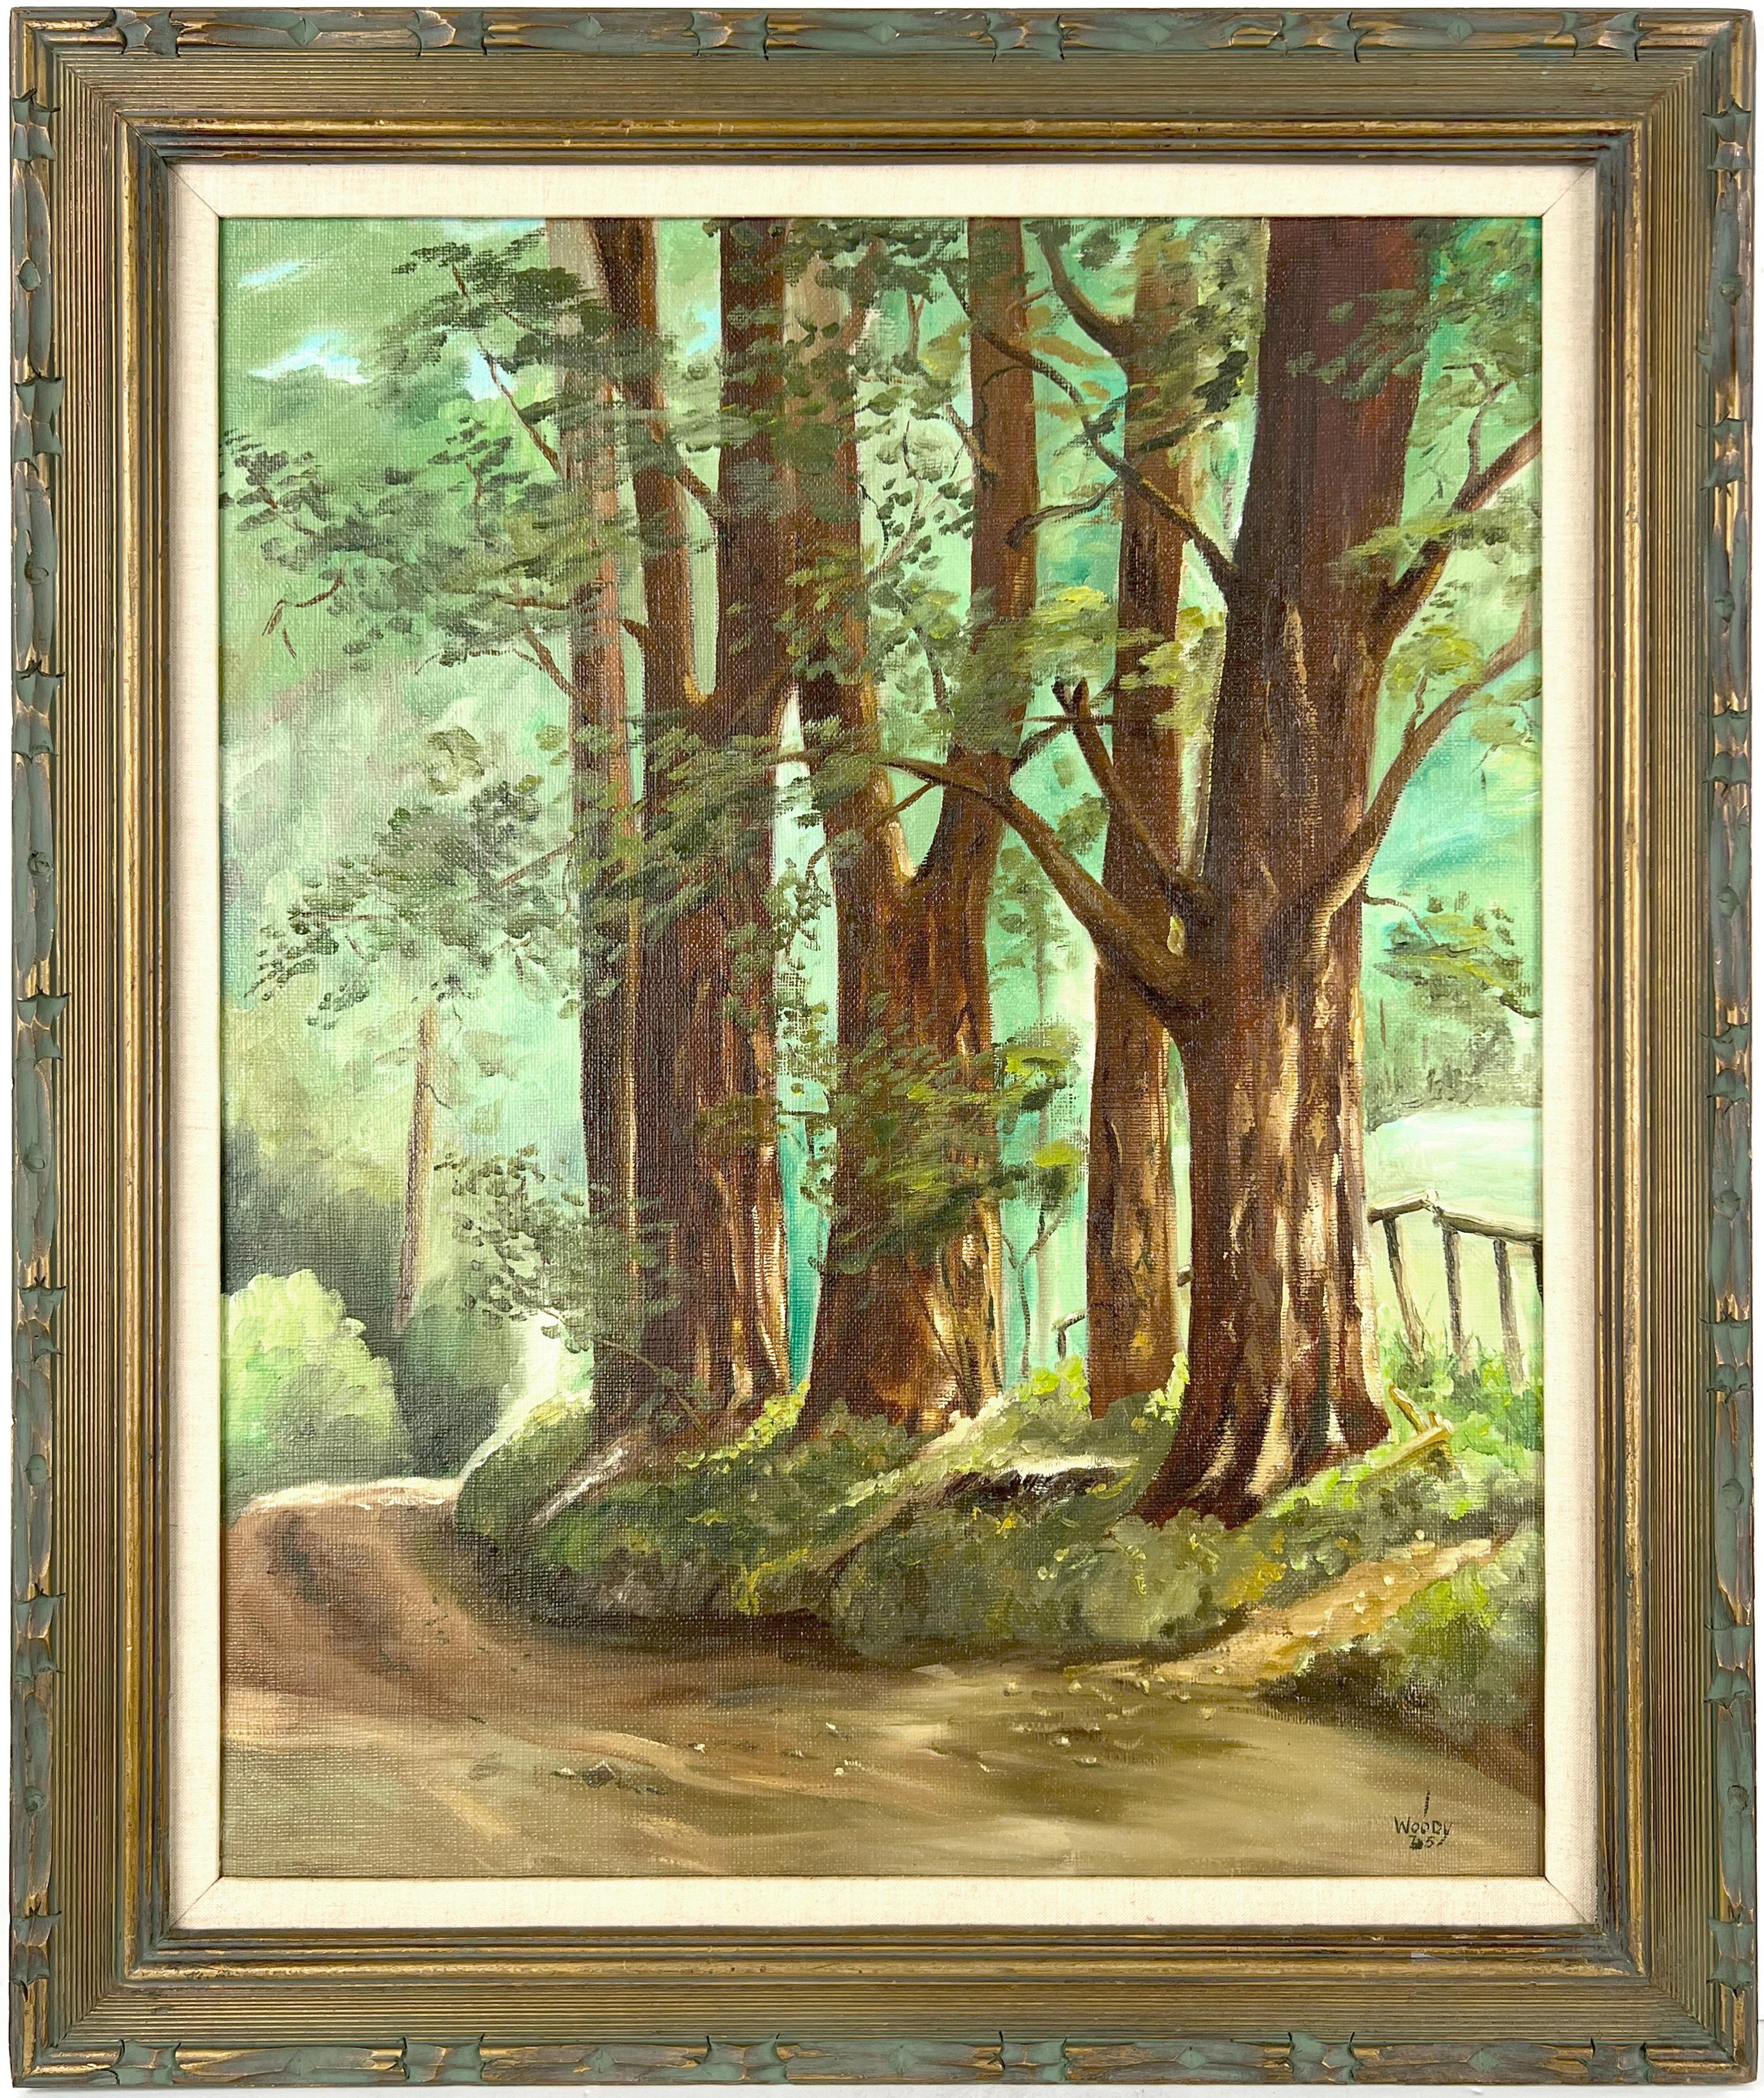 Gorman Woody Landscape Painting - "Back Road" California Redwoods Santa Cruz County Original Oil Painting 